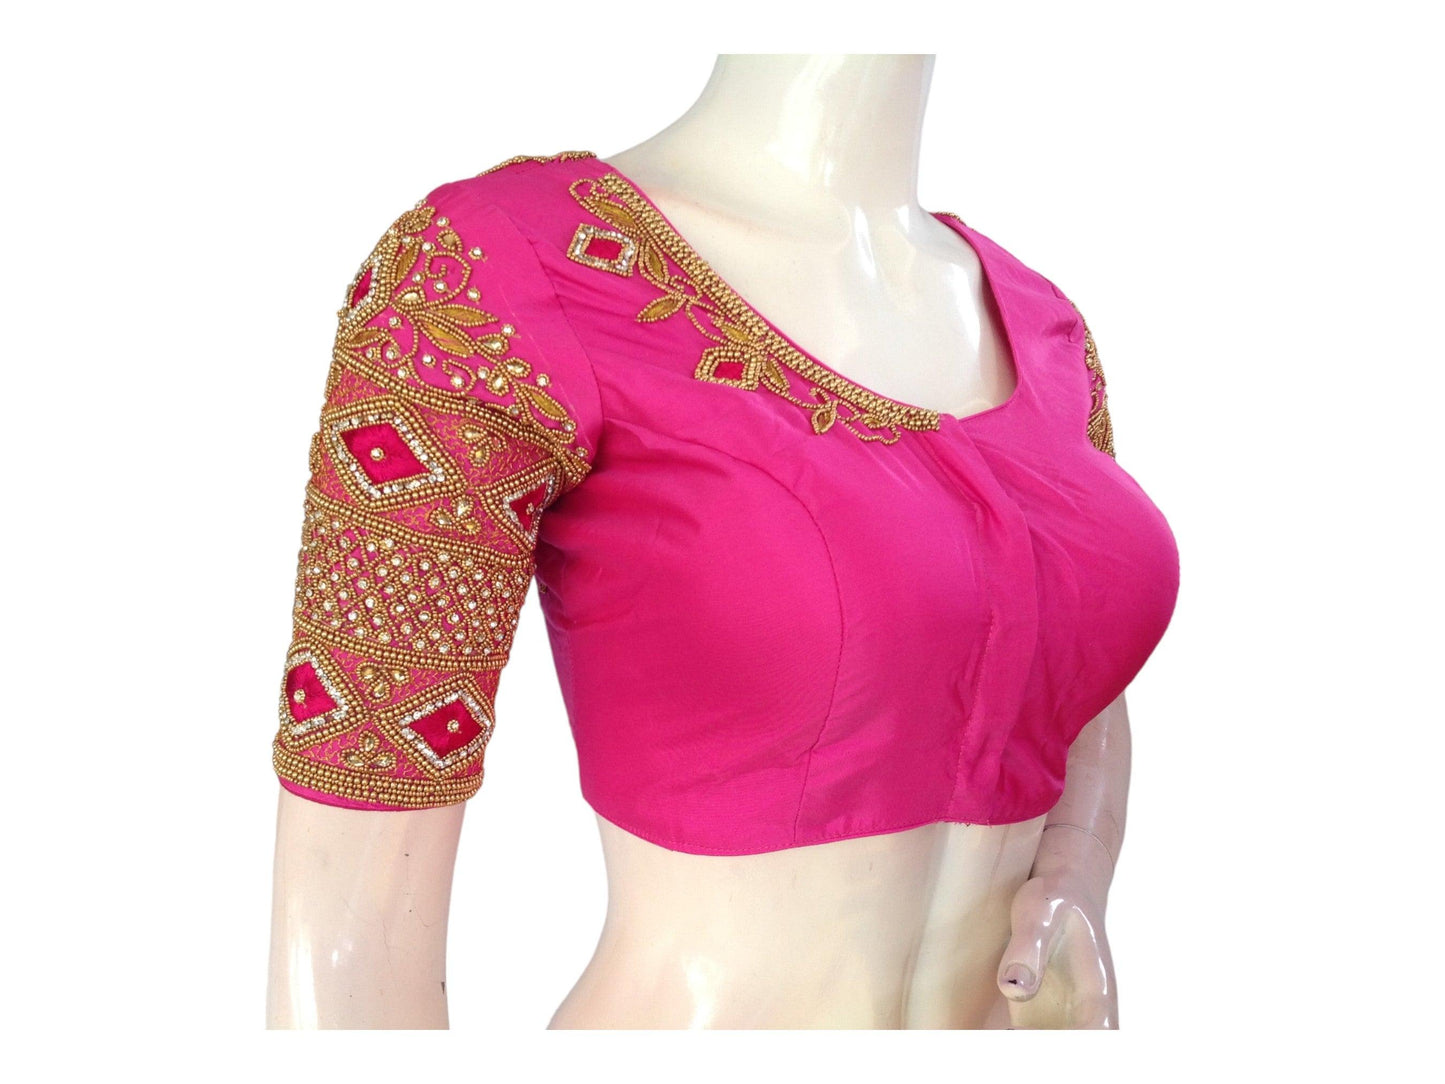 Exquisite Pink Bridal Handwork Saree Blouse, Indian Ethnic Wedding Choli Top